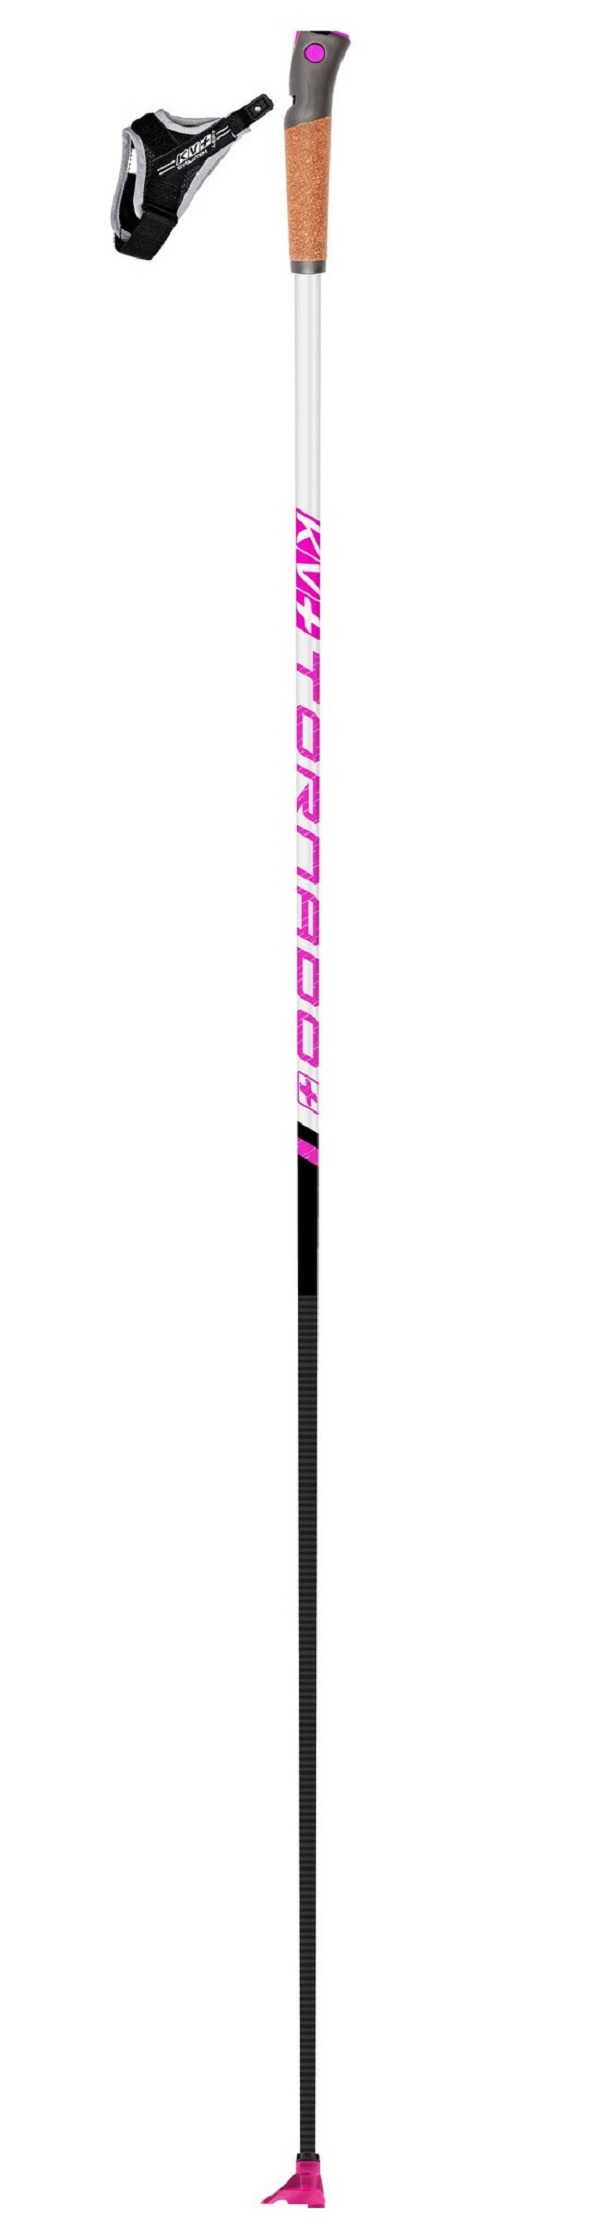 Лыжные палки KV+ Tornado plus jr pink qcd, 23P003JQP 157,5